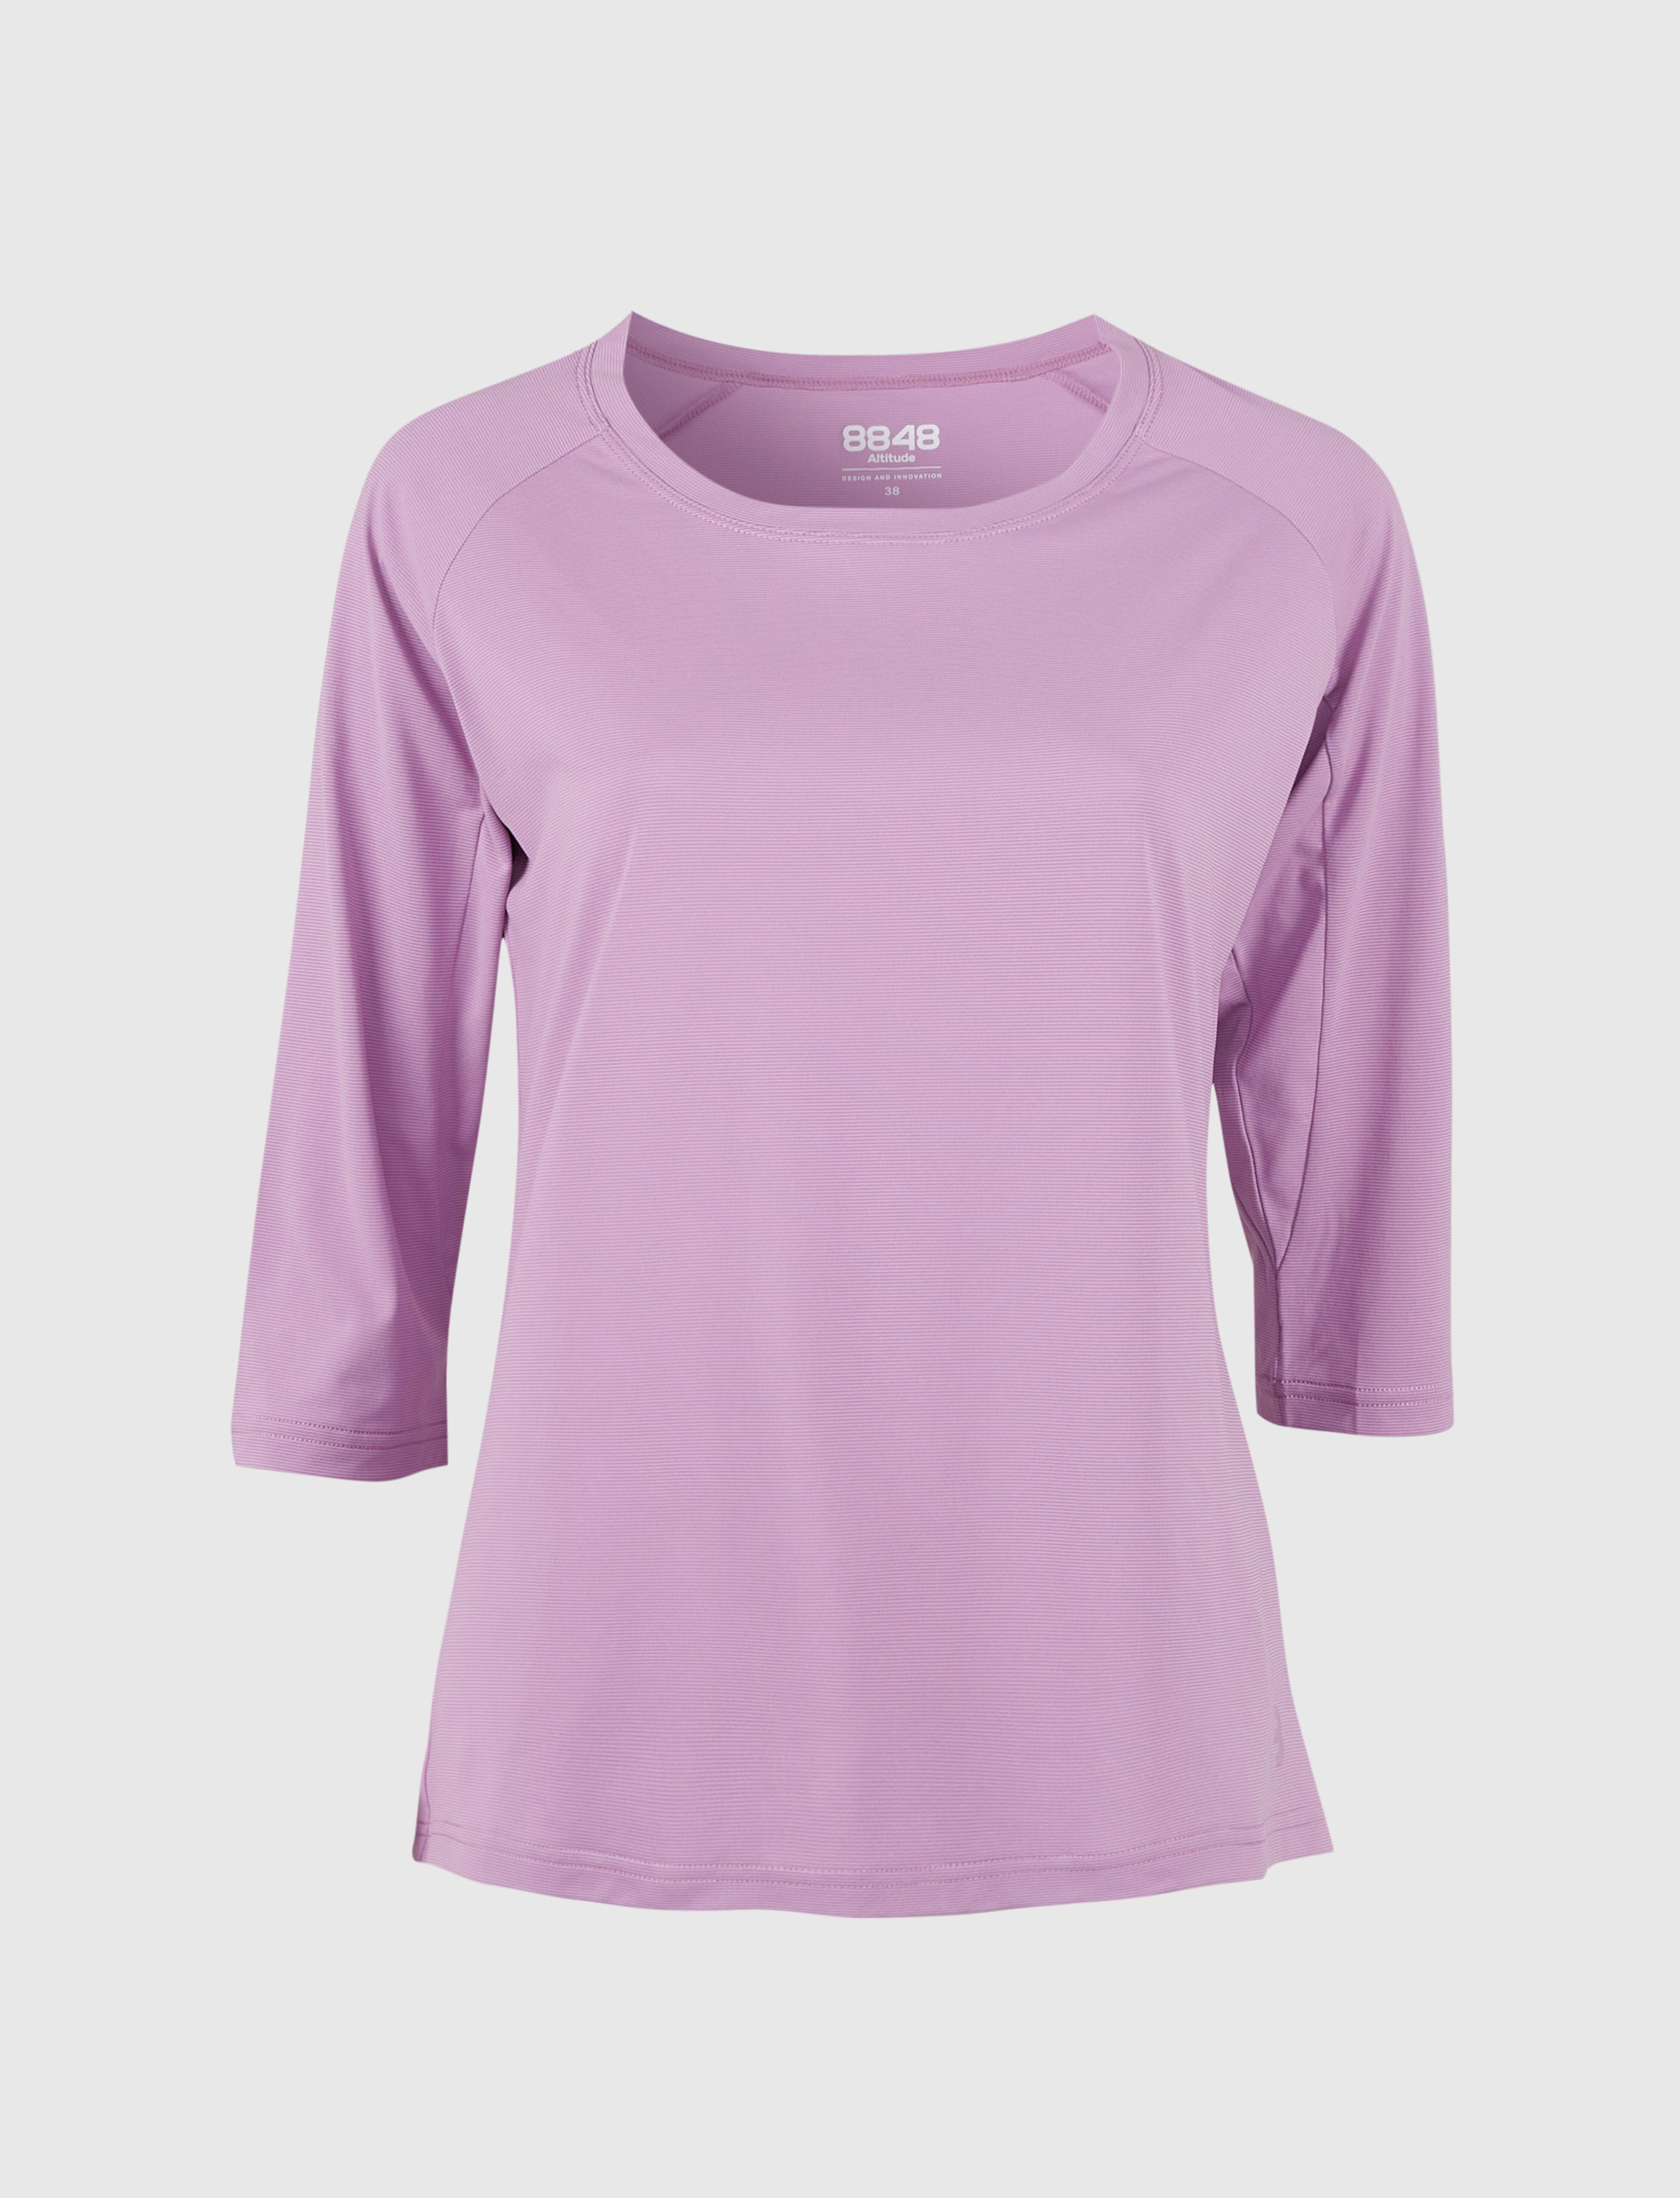 Dandilon W Tee Lilac - Violette längeres T-Shirt Damen